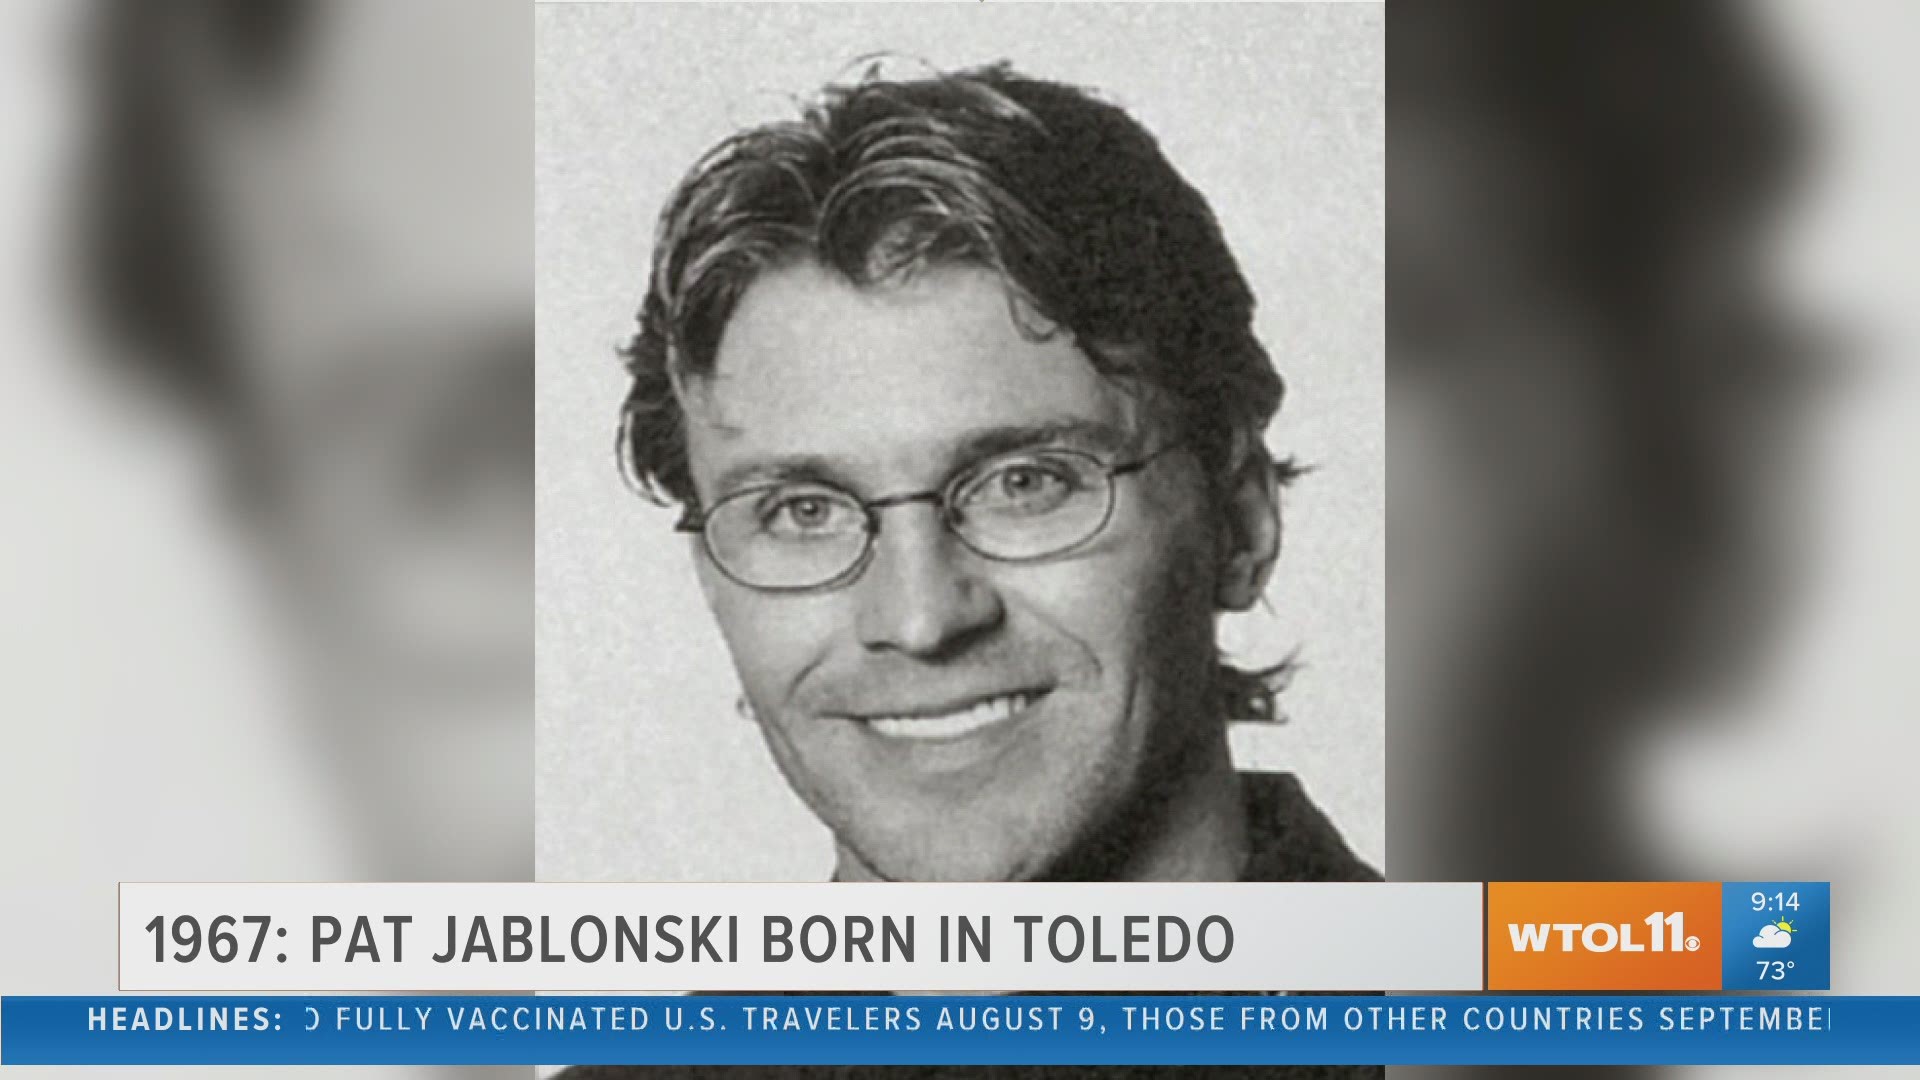 In 1967, future NHL hockey player Pat Jablonski is born in Toledo.